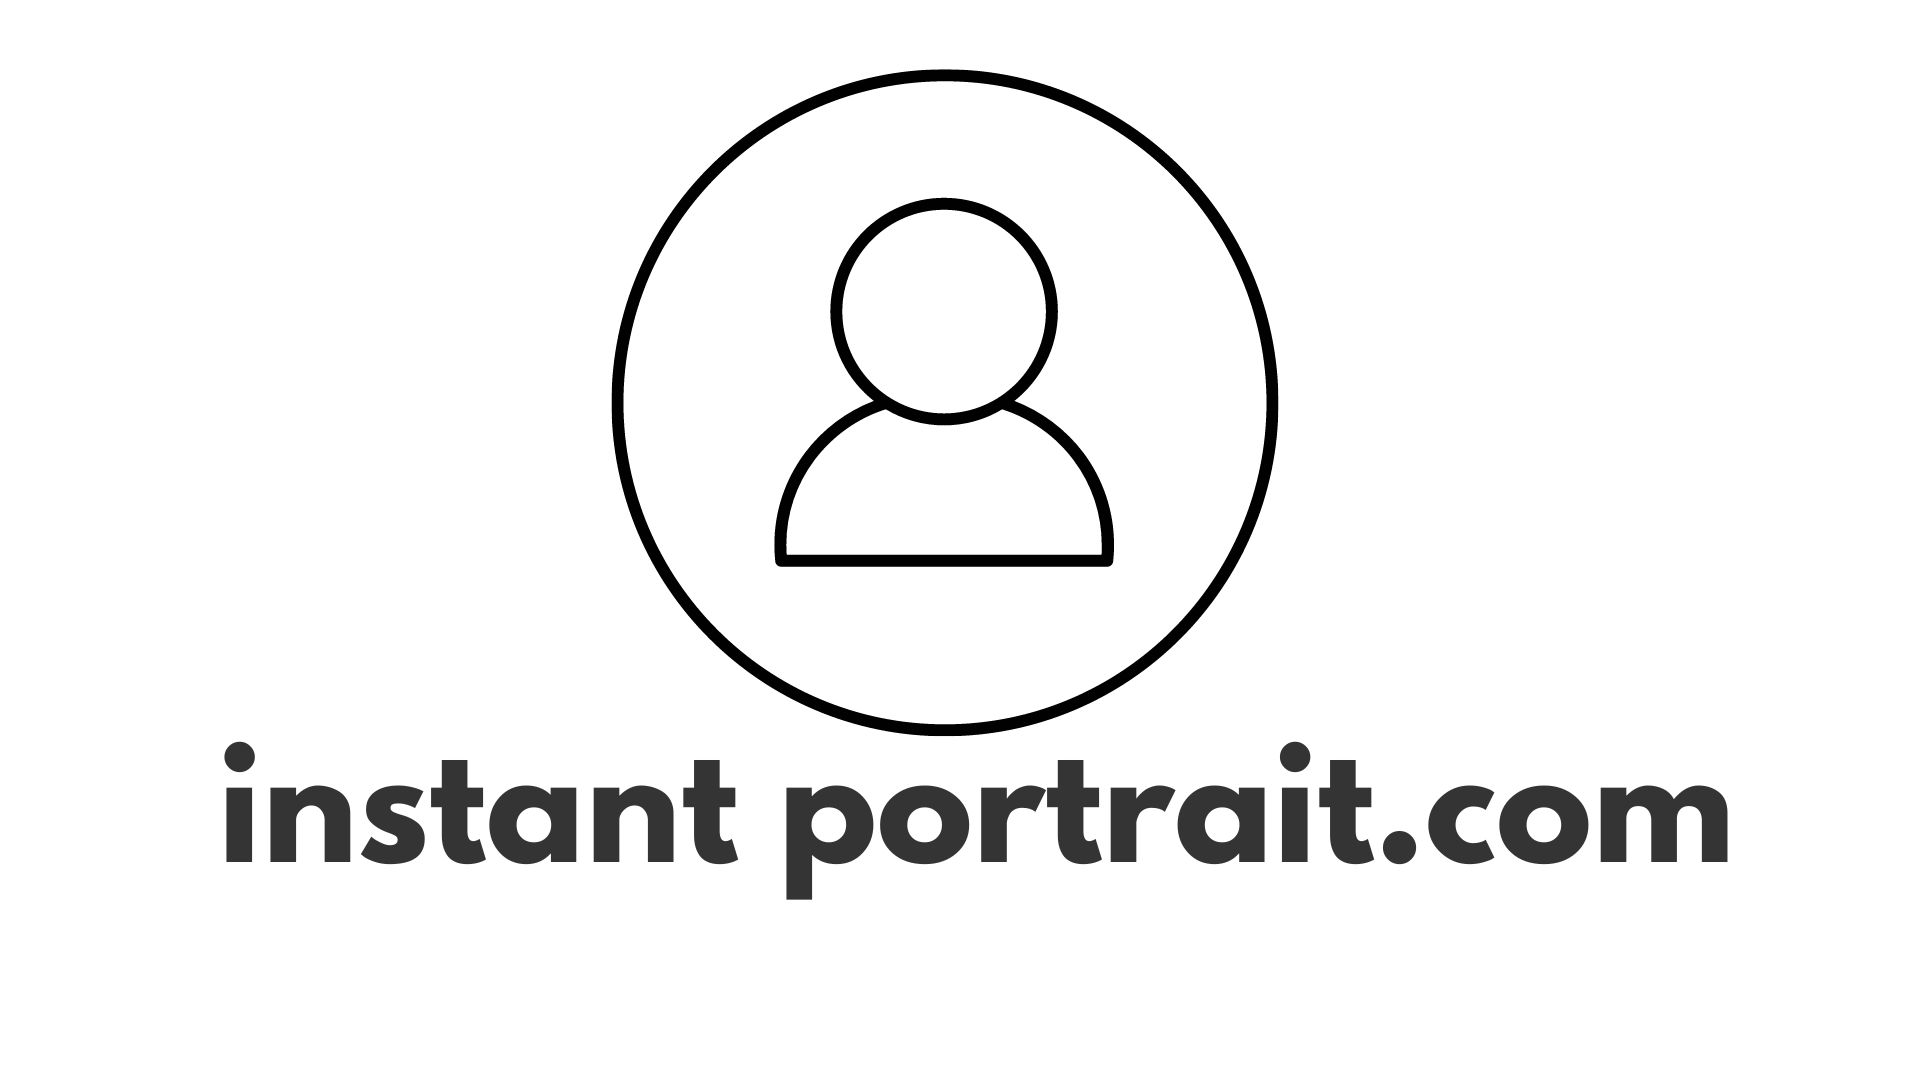 How to use instant portrait.com to generate portrait photos